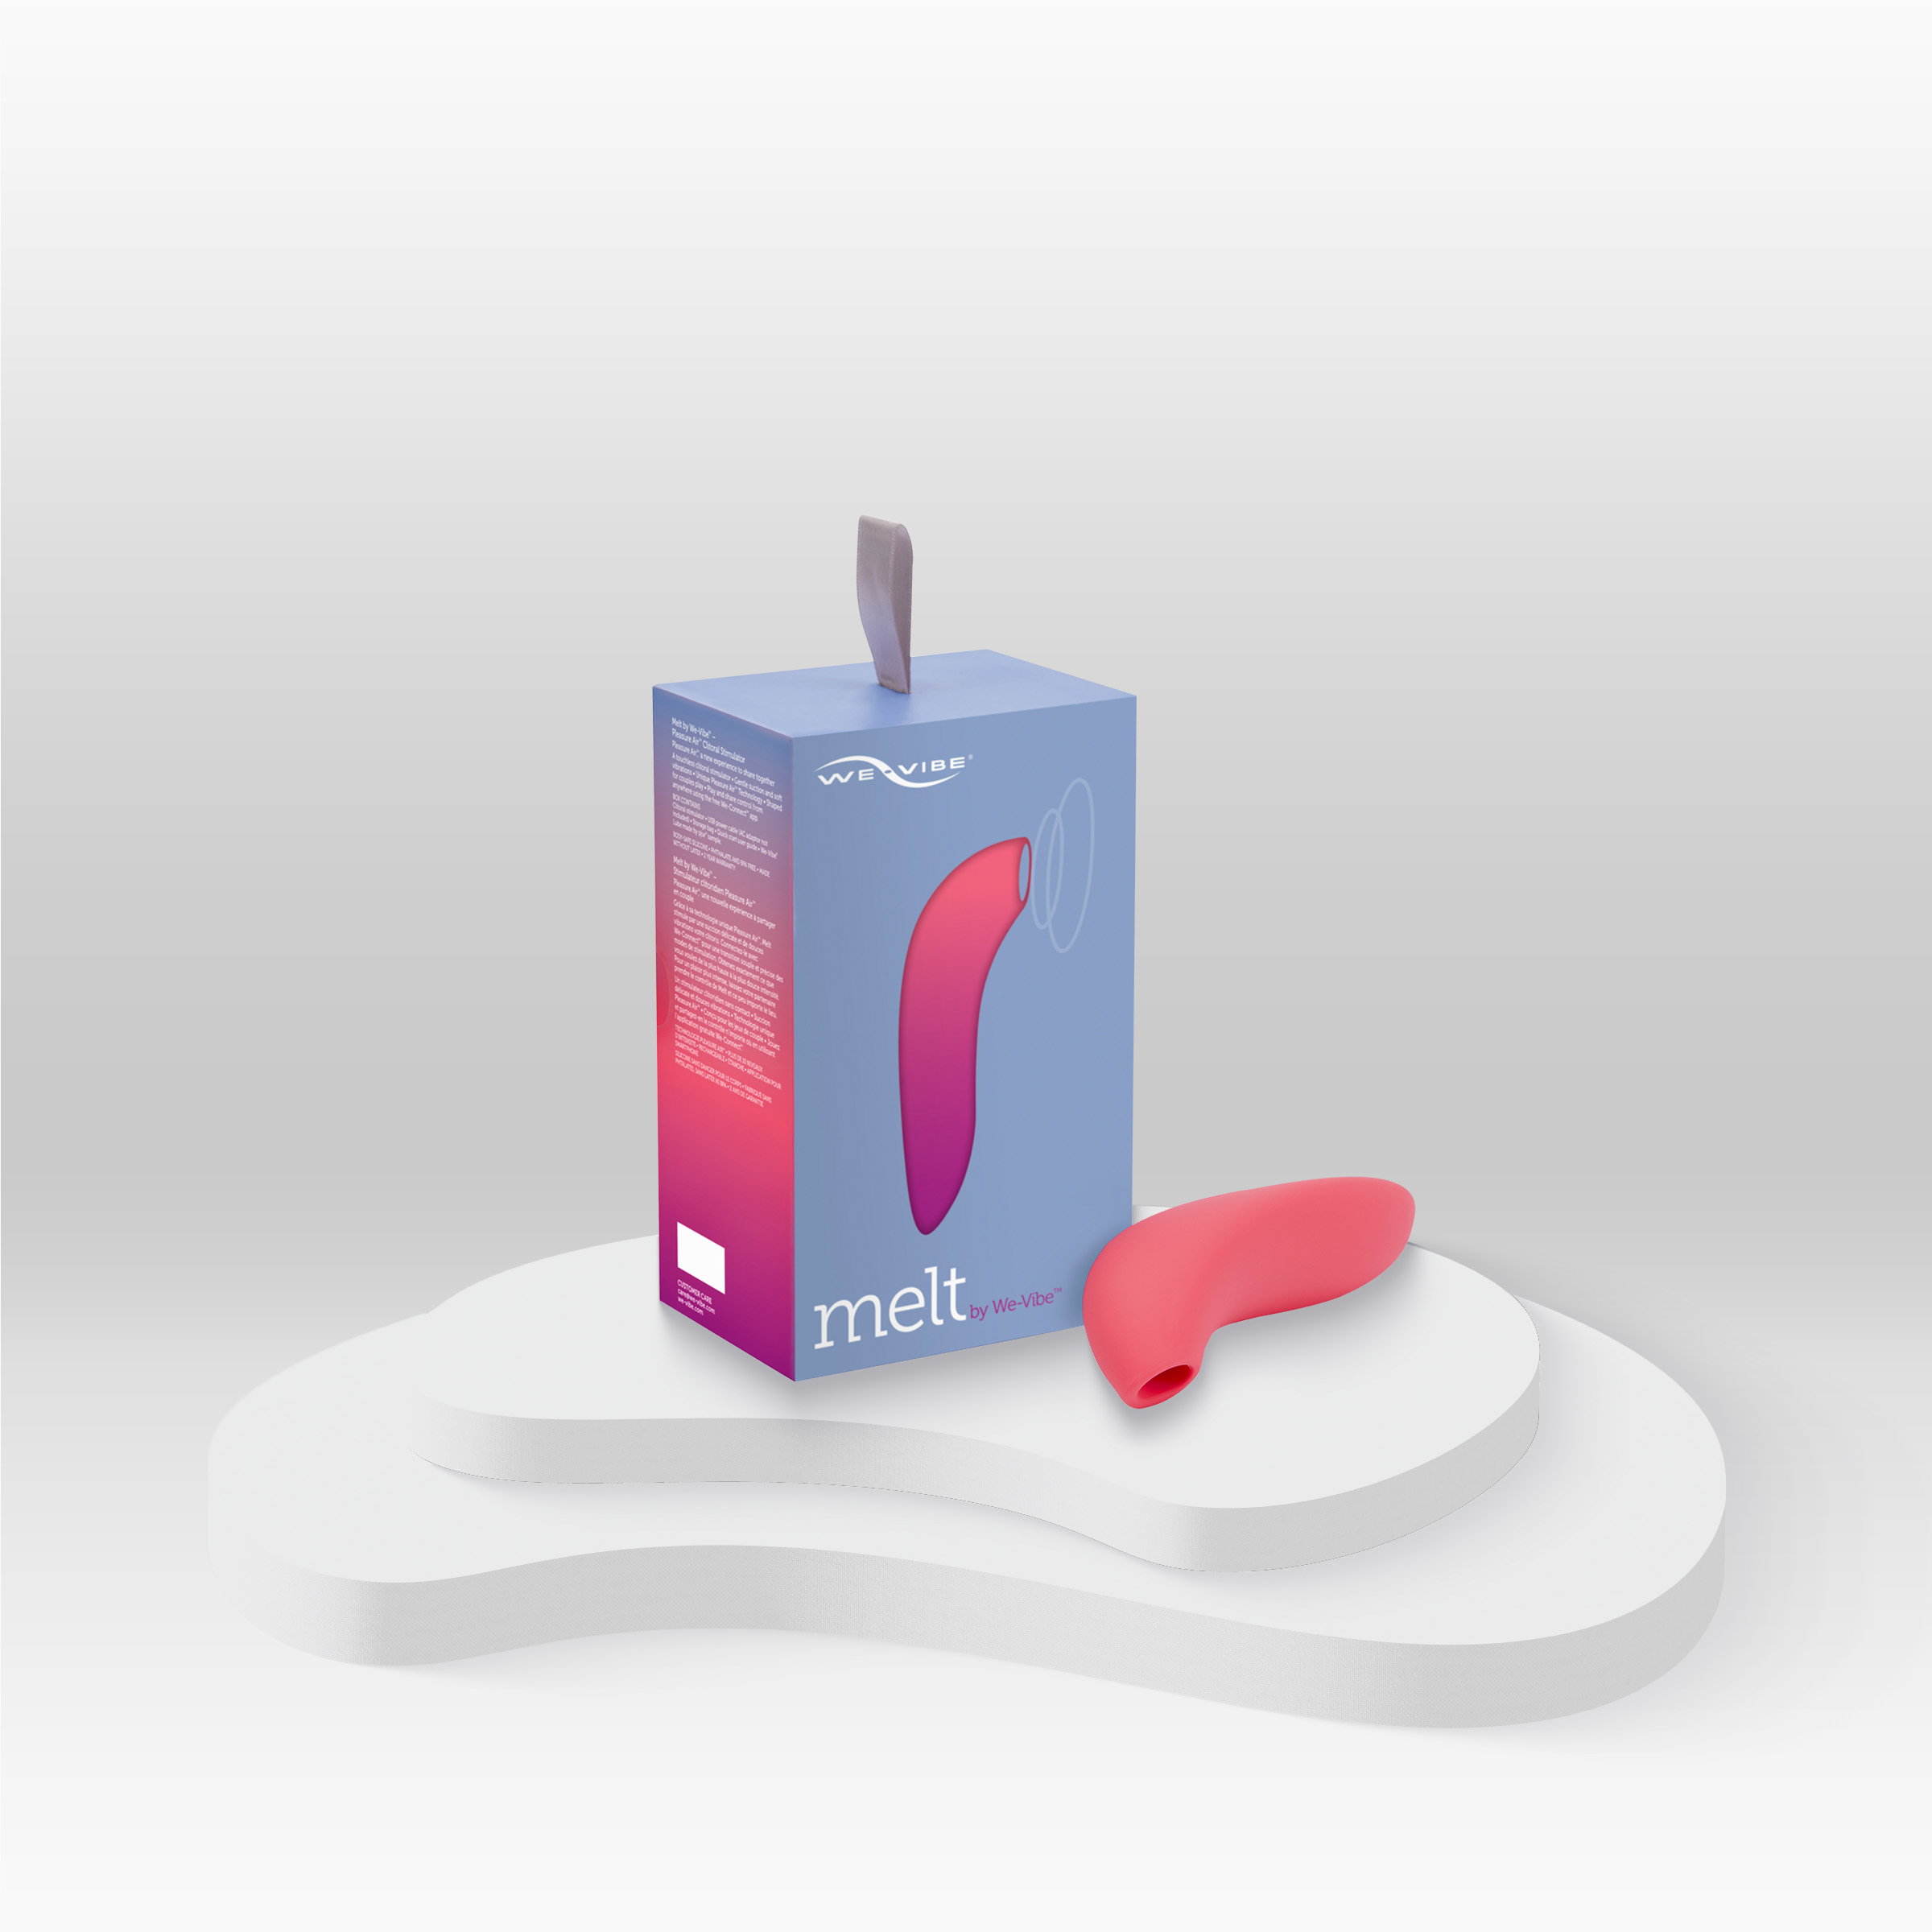 We-Vibe Melt Pleasure Air Stimulator with App, Pink - image 8 of 10